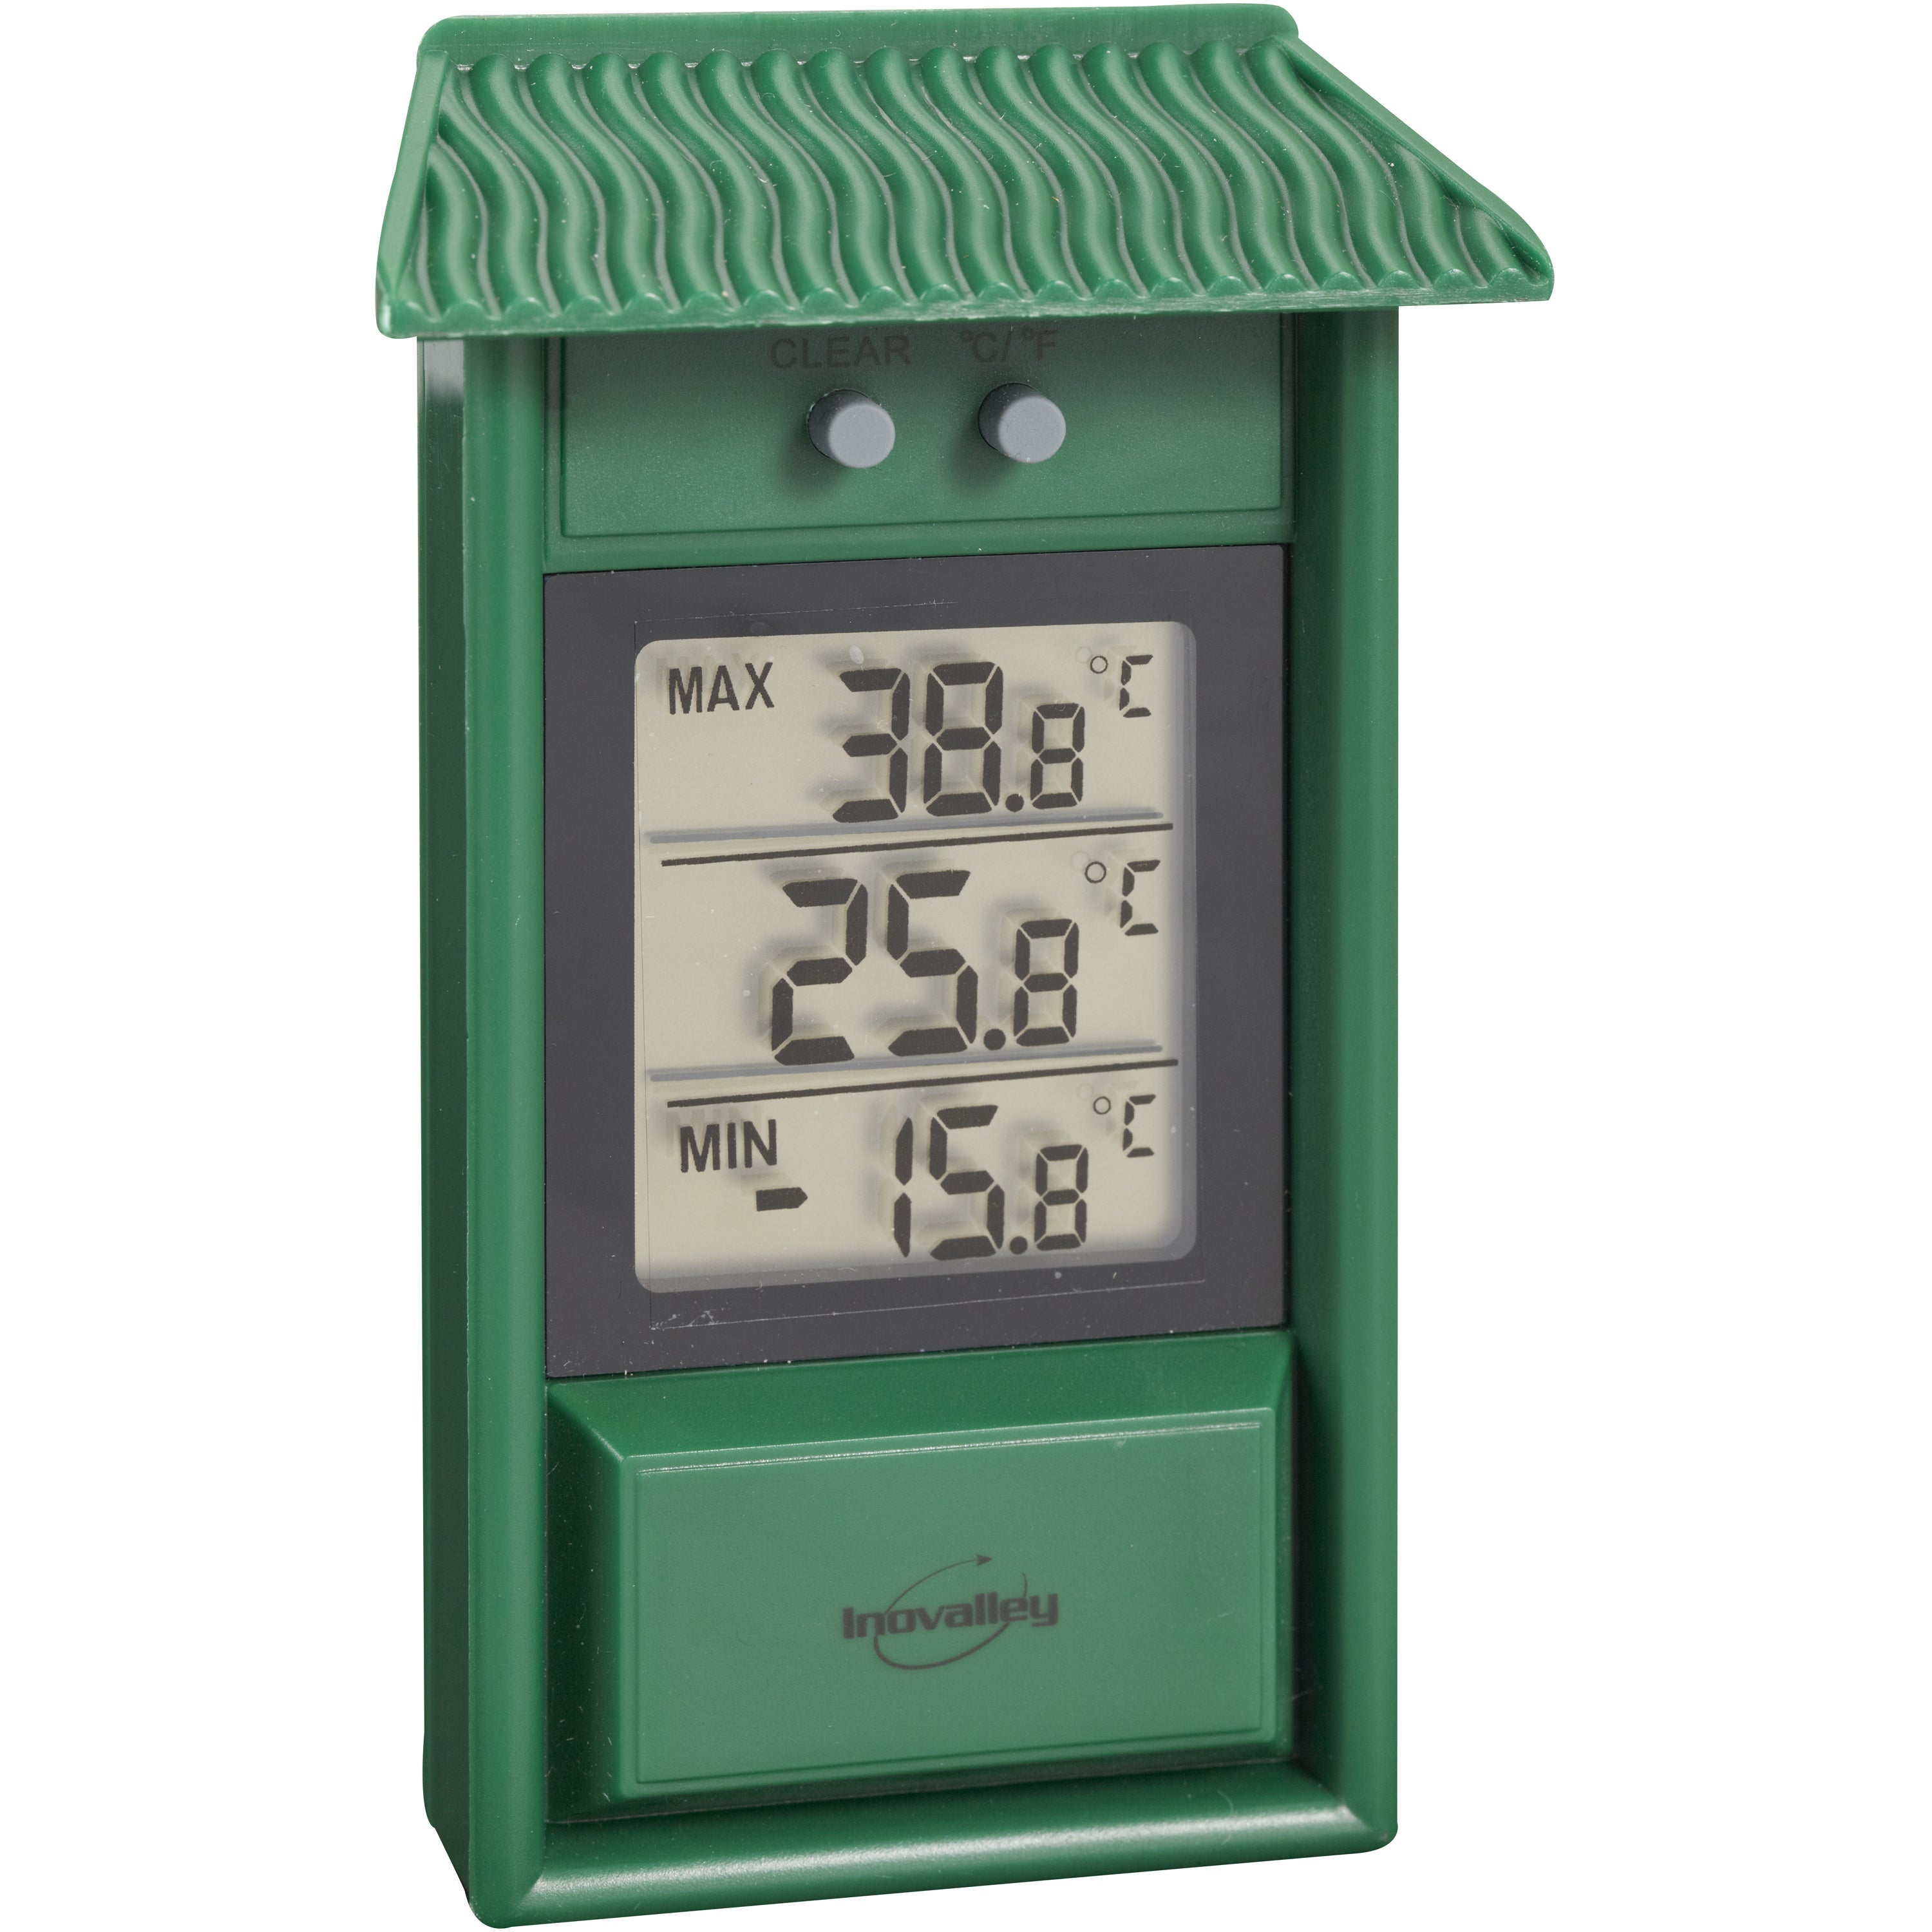 Thermomètre pour chauffage central - Cazabox